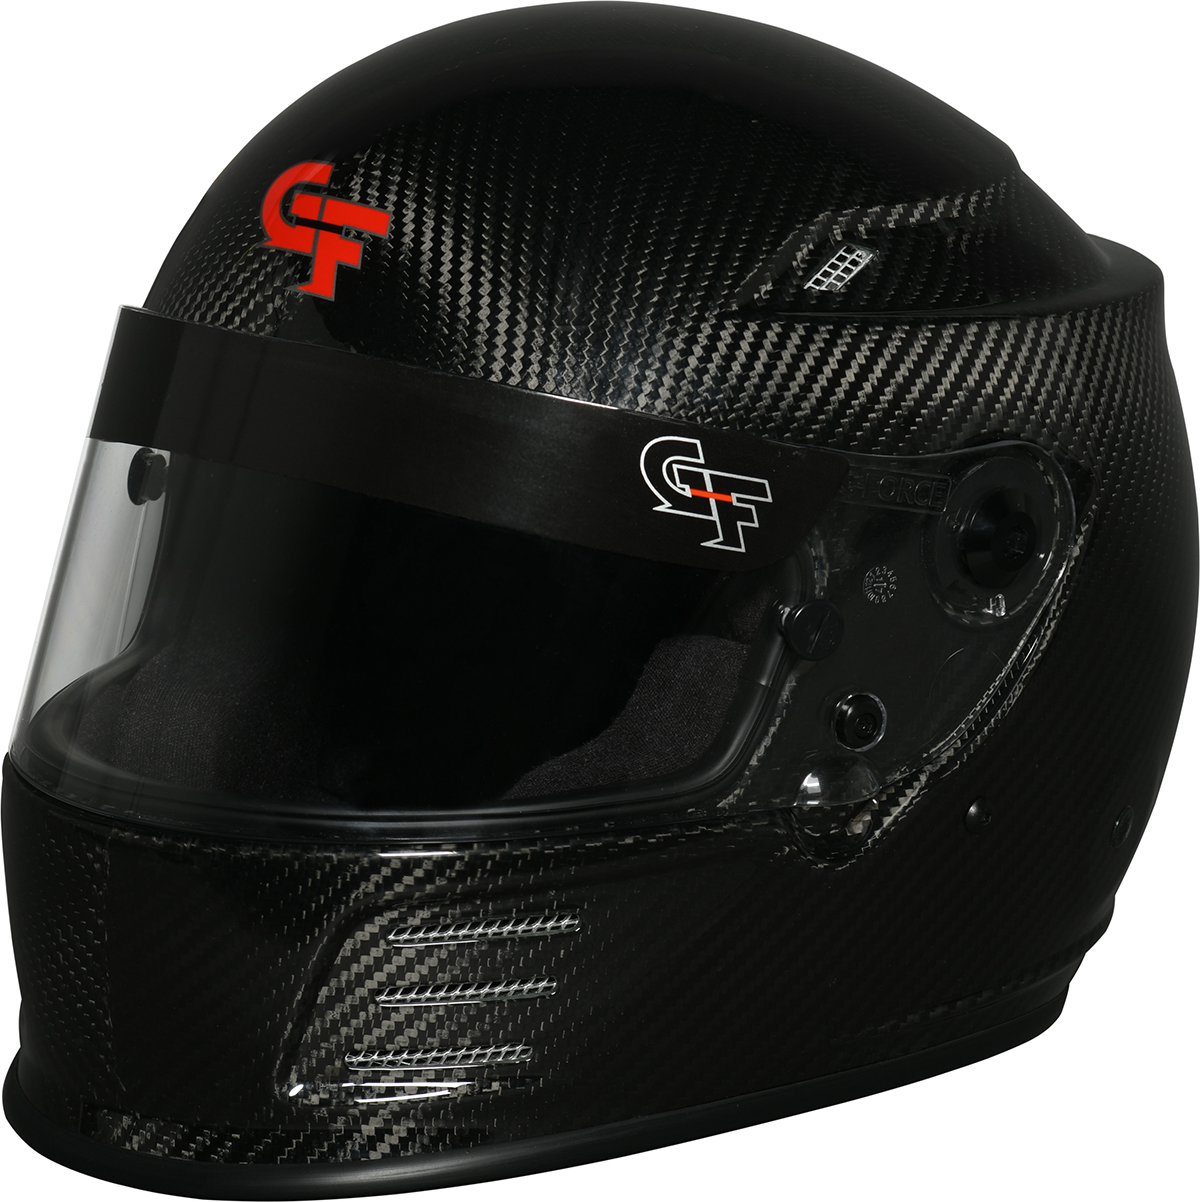 G-Force Racing Gear Helmet, REVO CARBON FULL FACE LRG BK SA15